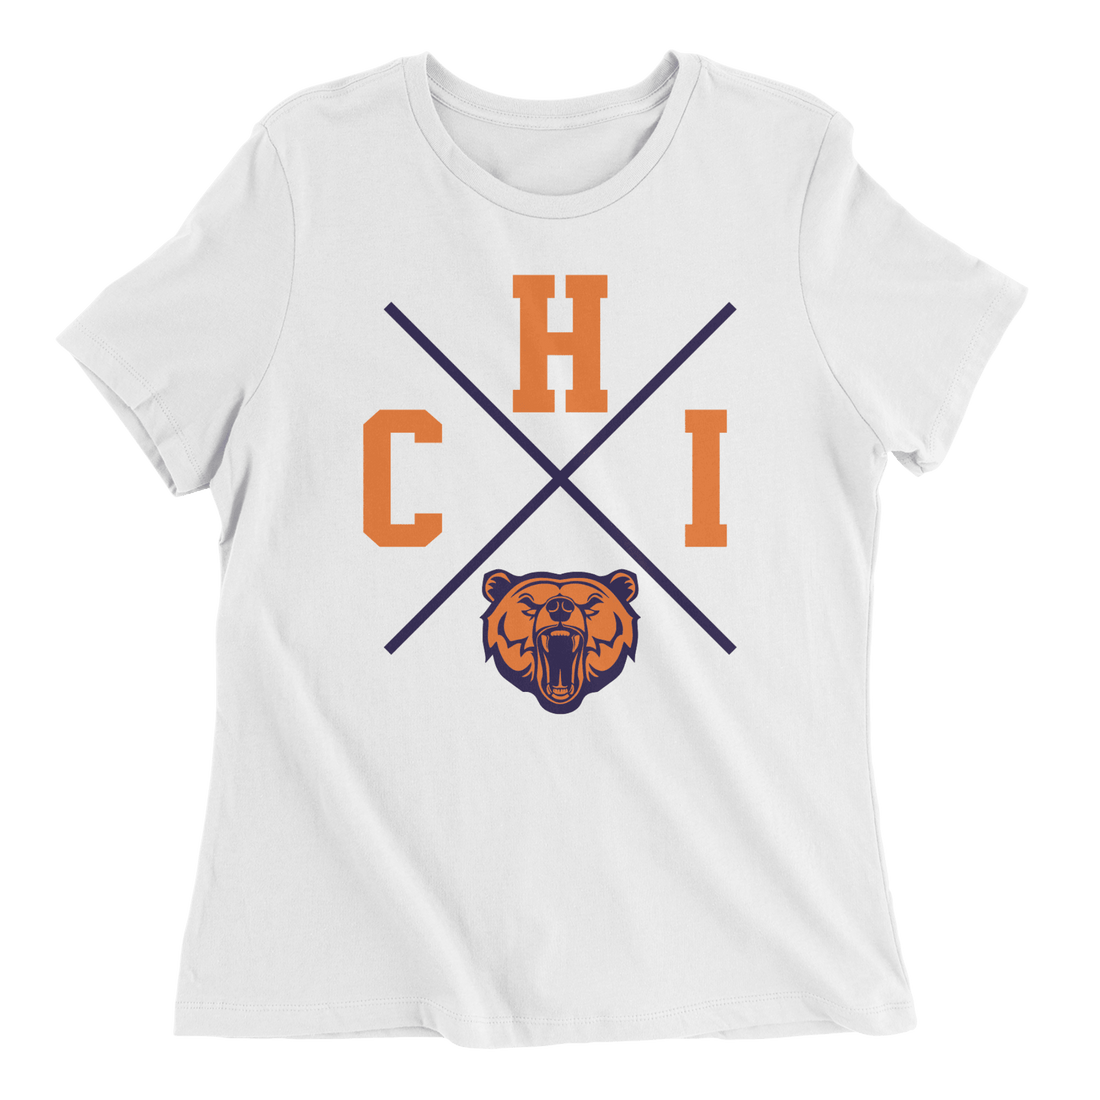 CHI Bears - The T-Shirt Deli, Co.